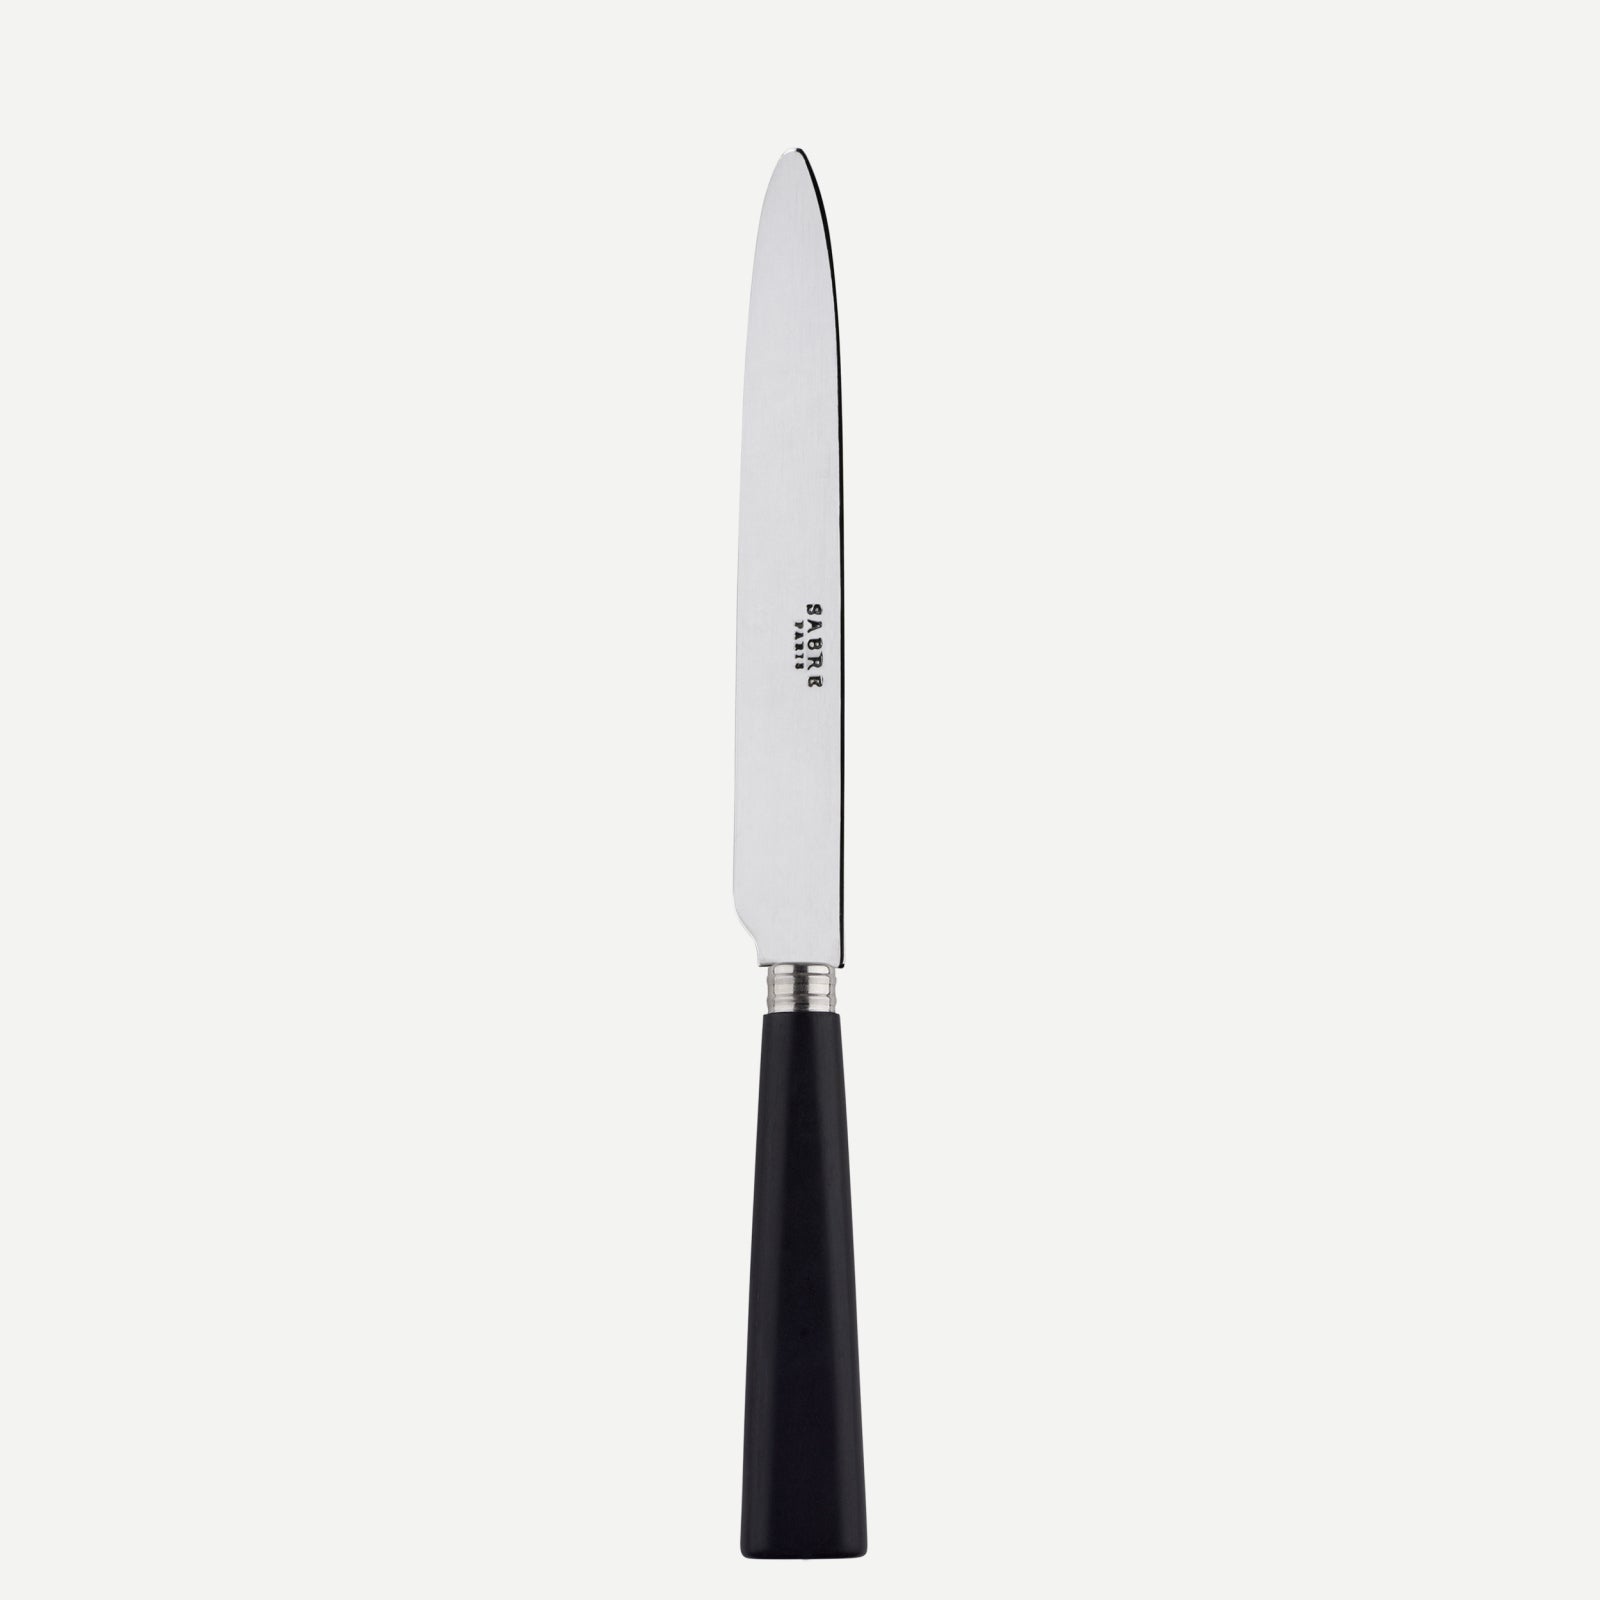 Dinner knife - Nature - Black press wood